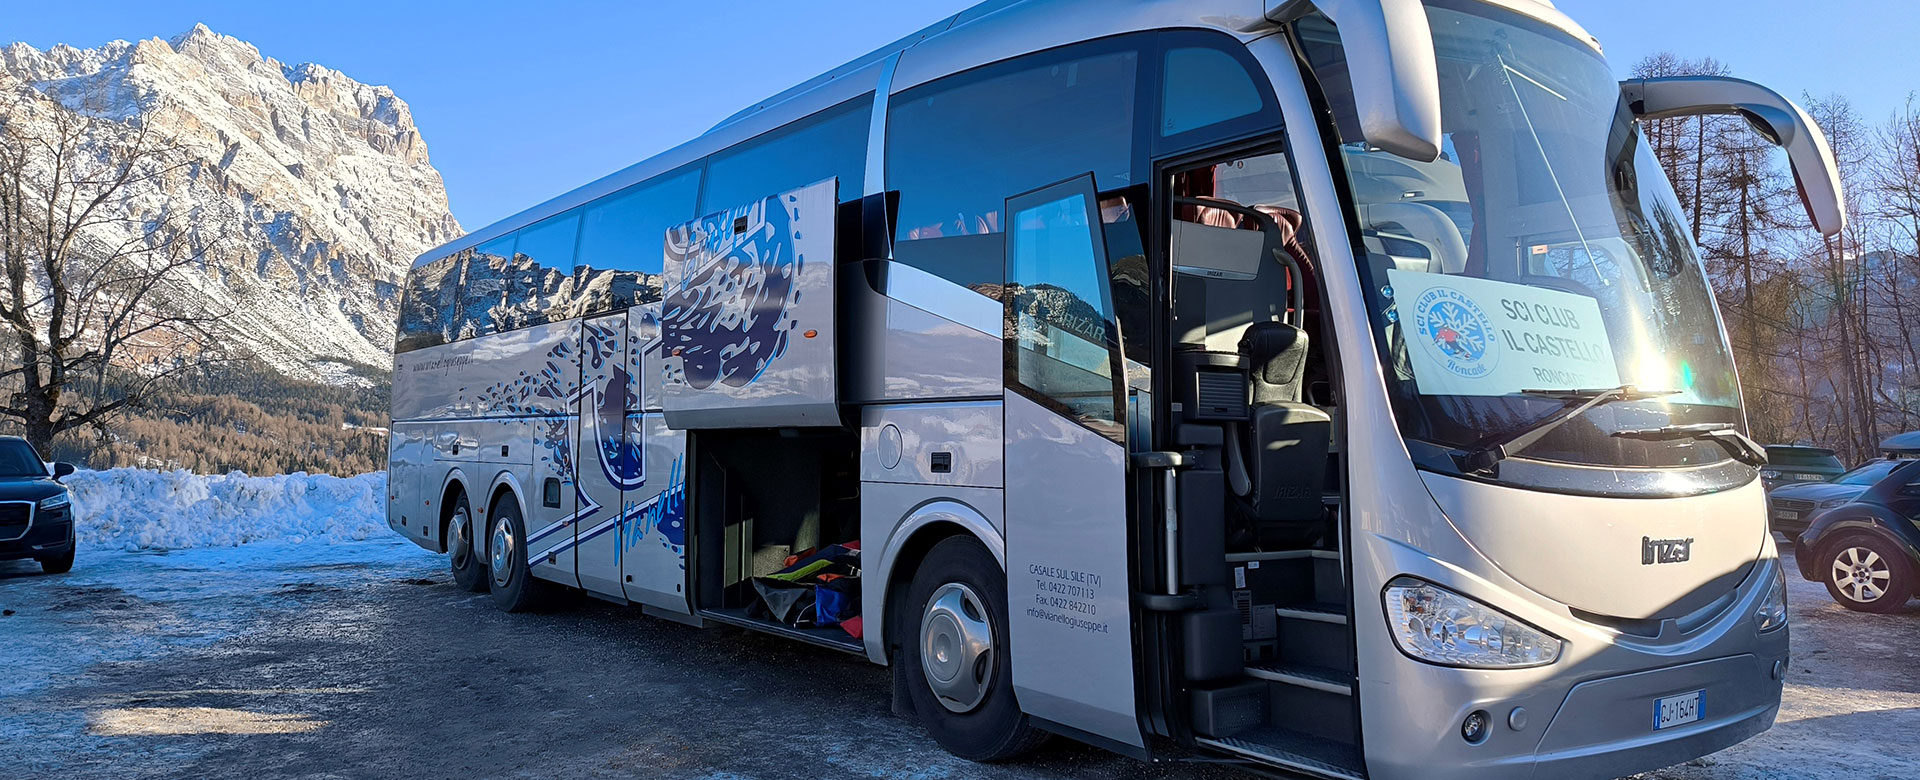 Viaggi e Turismo - coach, bus, and minibus rental